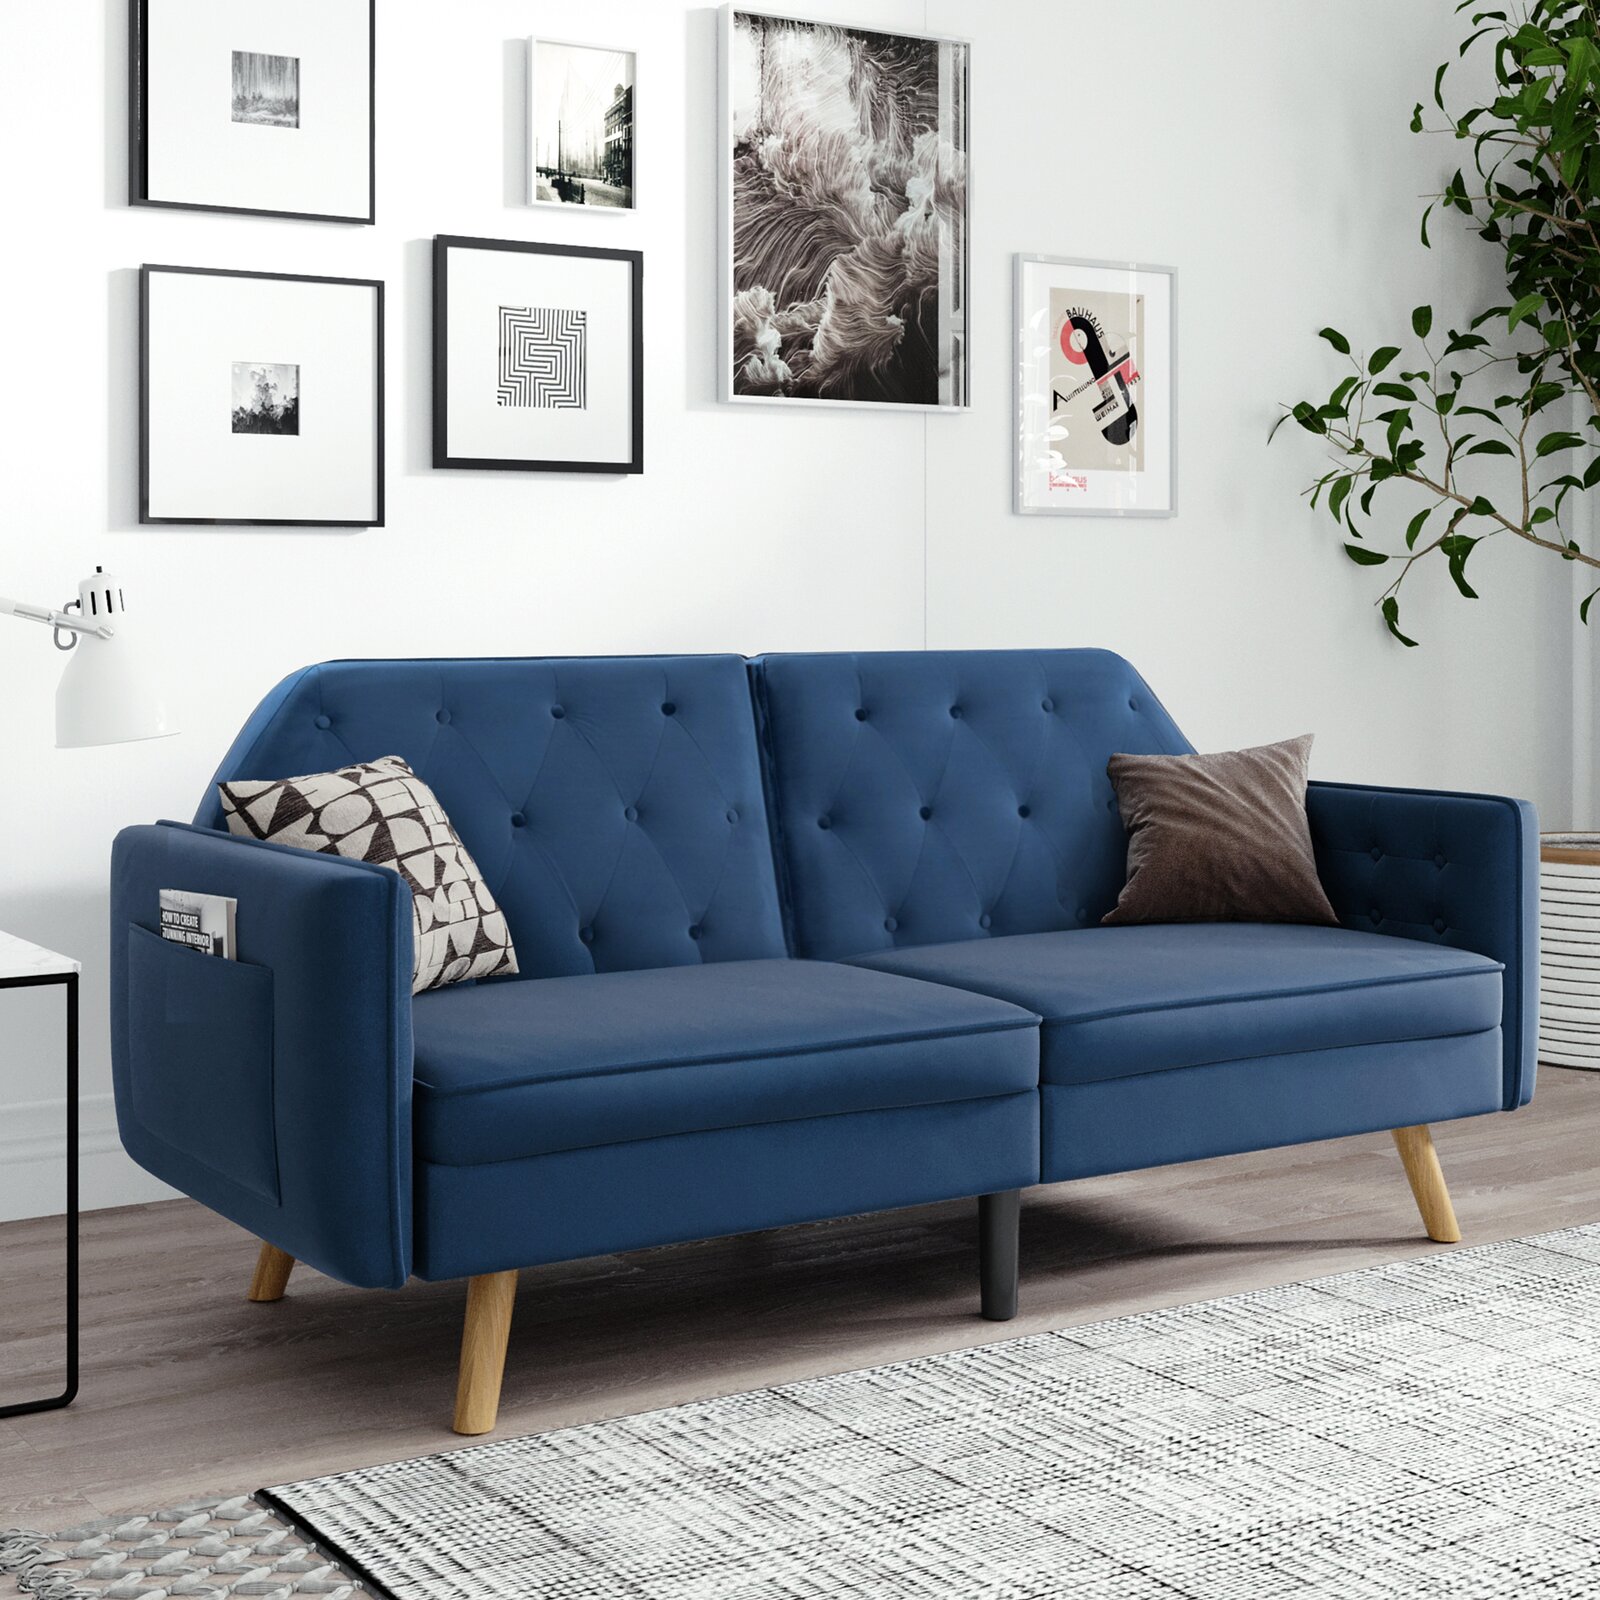 Everly Quinn Mannah 78.74'' Upholstered Sofa